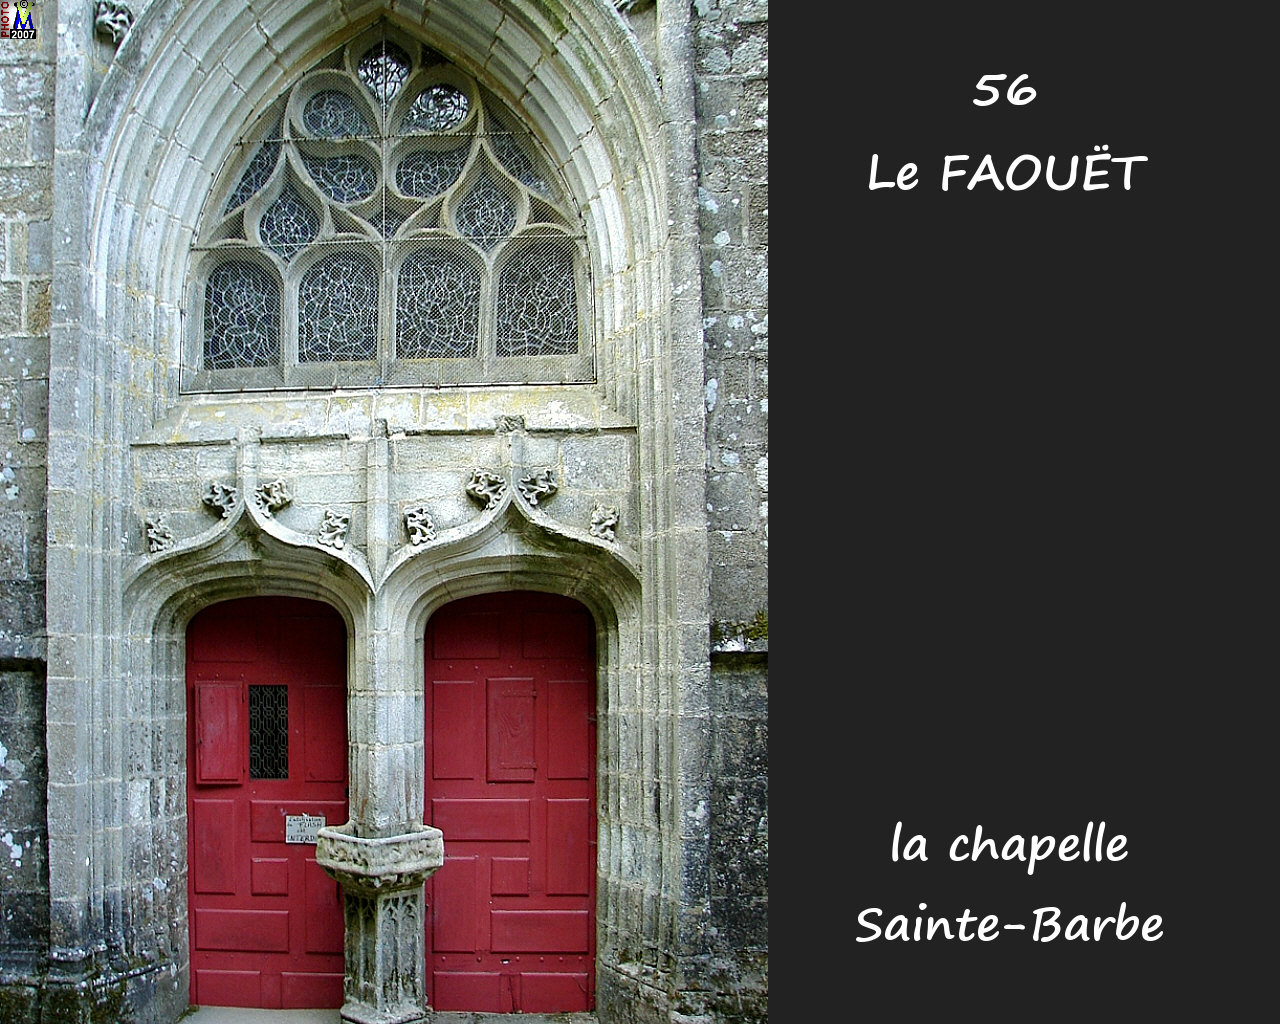 56FAOUET_chapelle-barbe_122.jpg